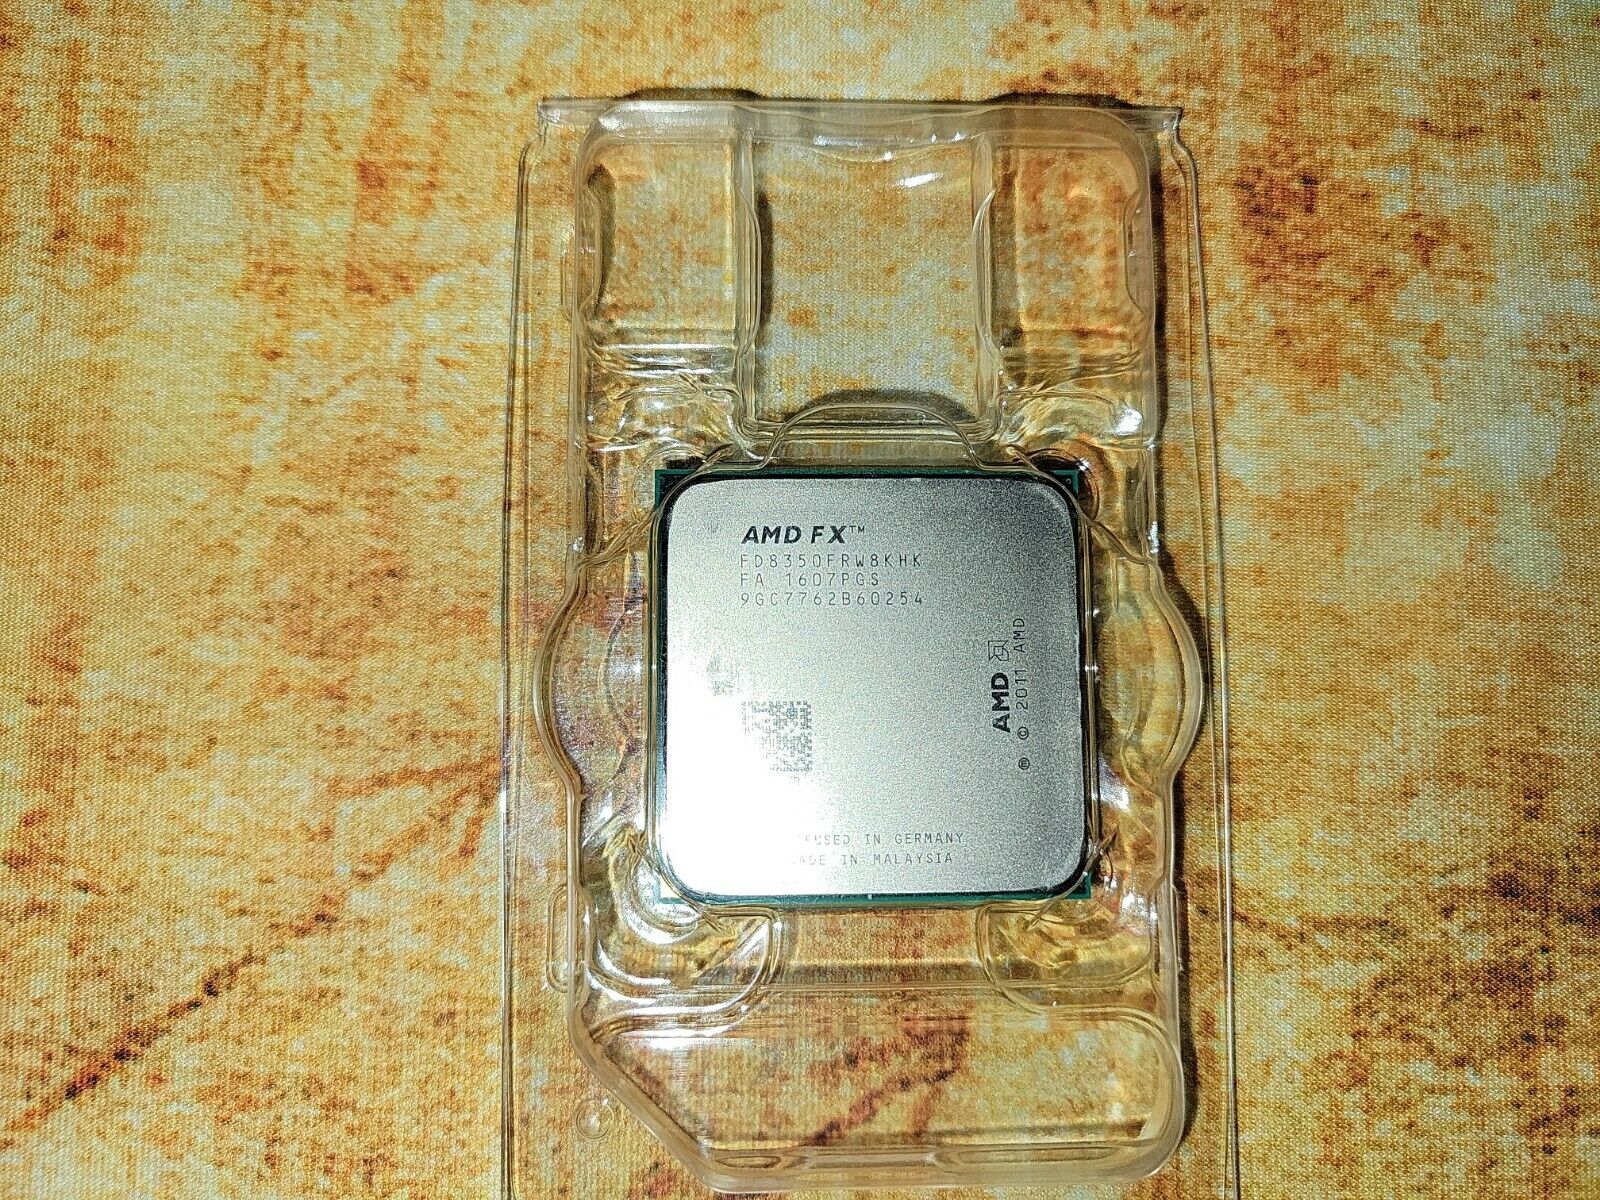 AMD FX-8350  4.0GHz Octa-Core AM3+ Processor (FD8350FRW8KHK)